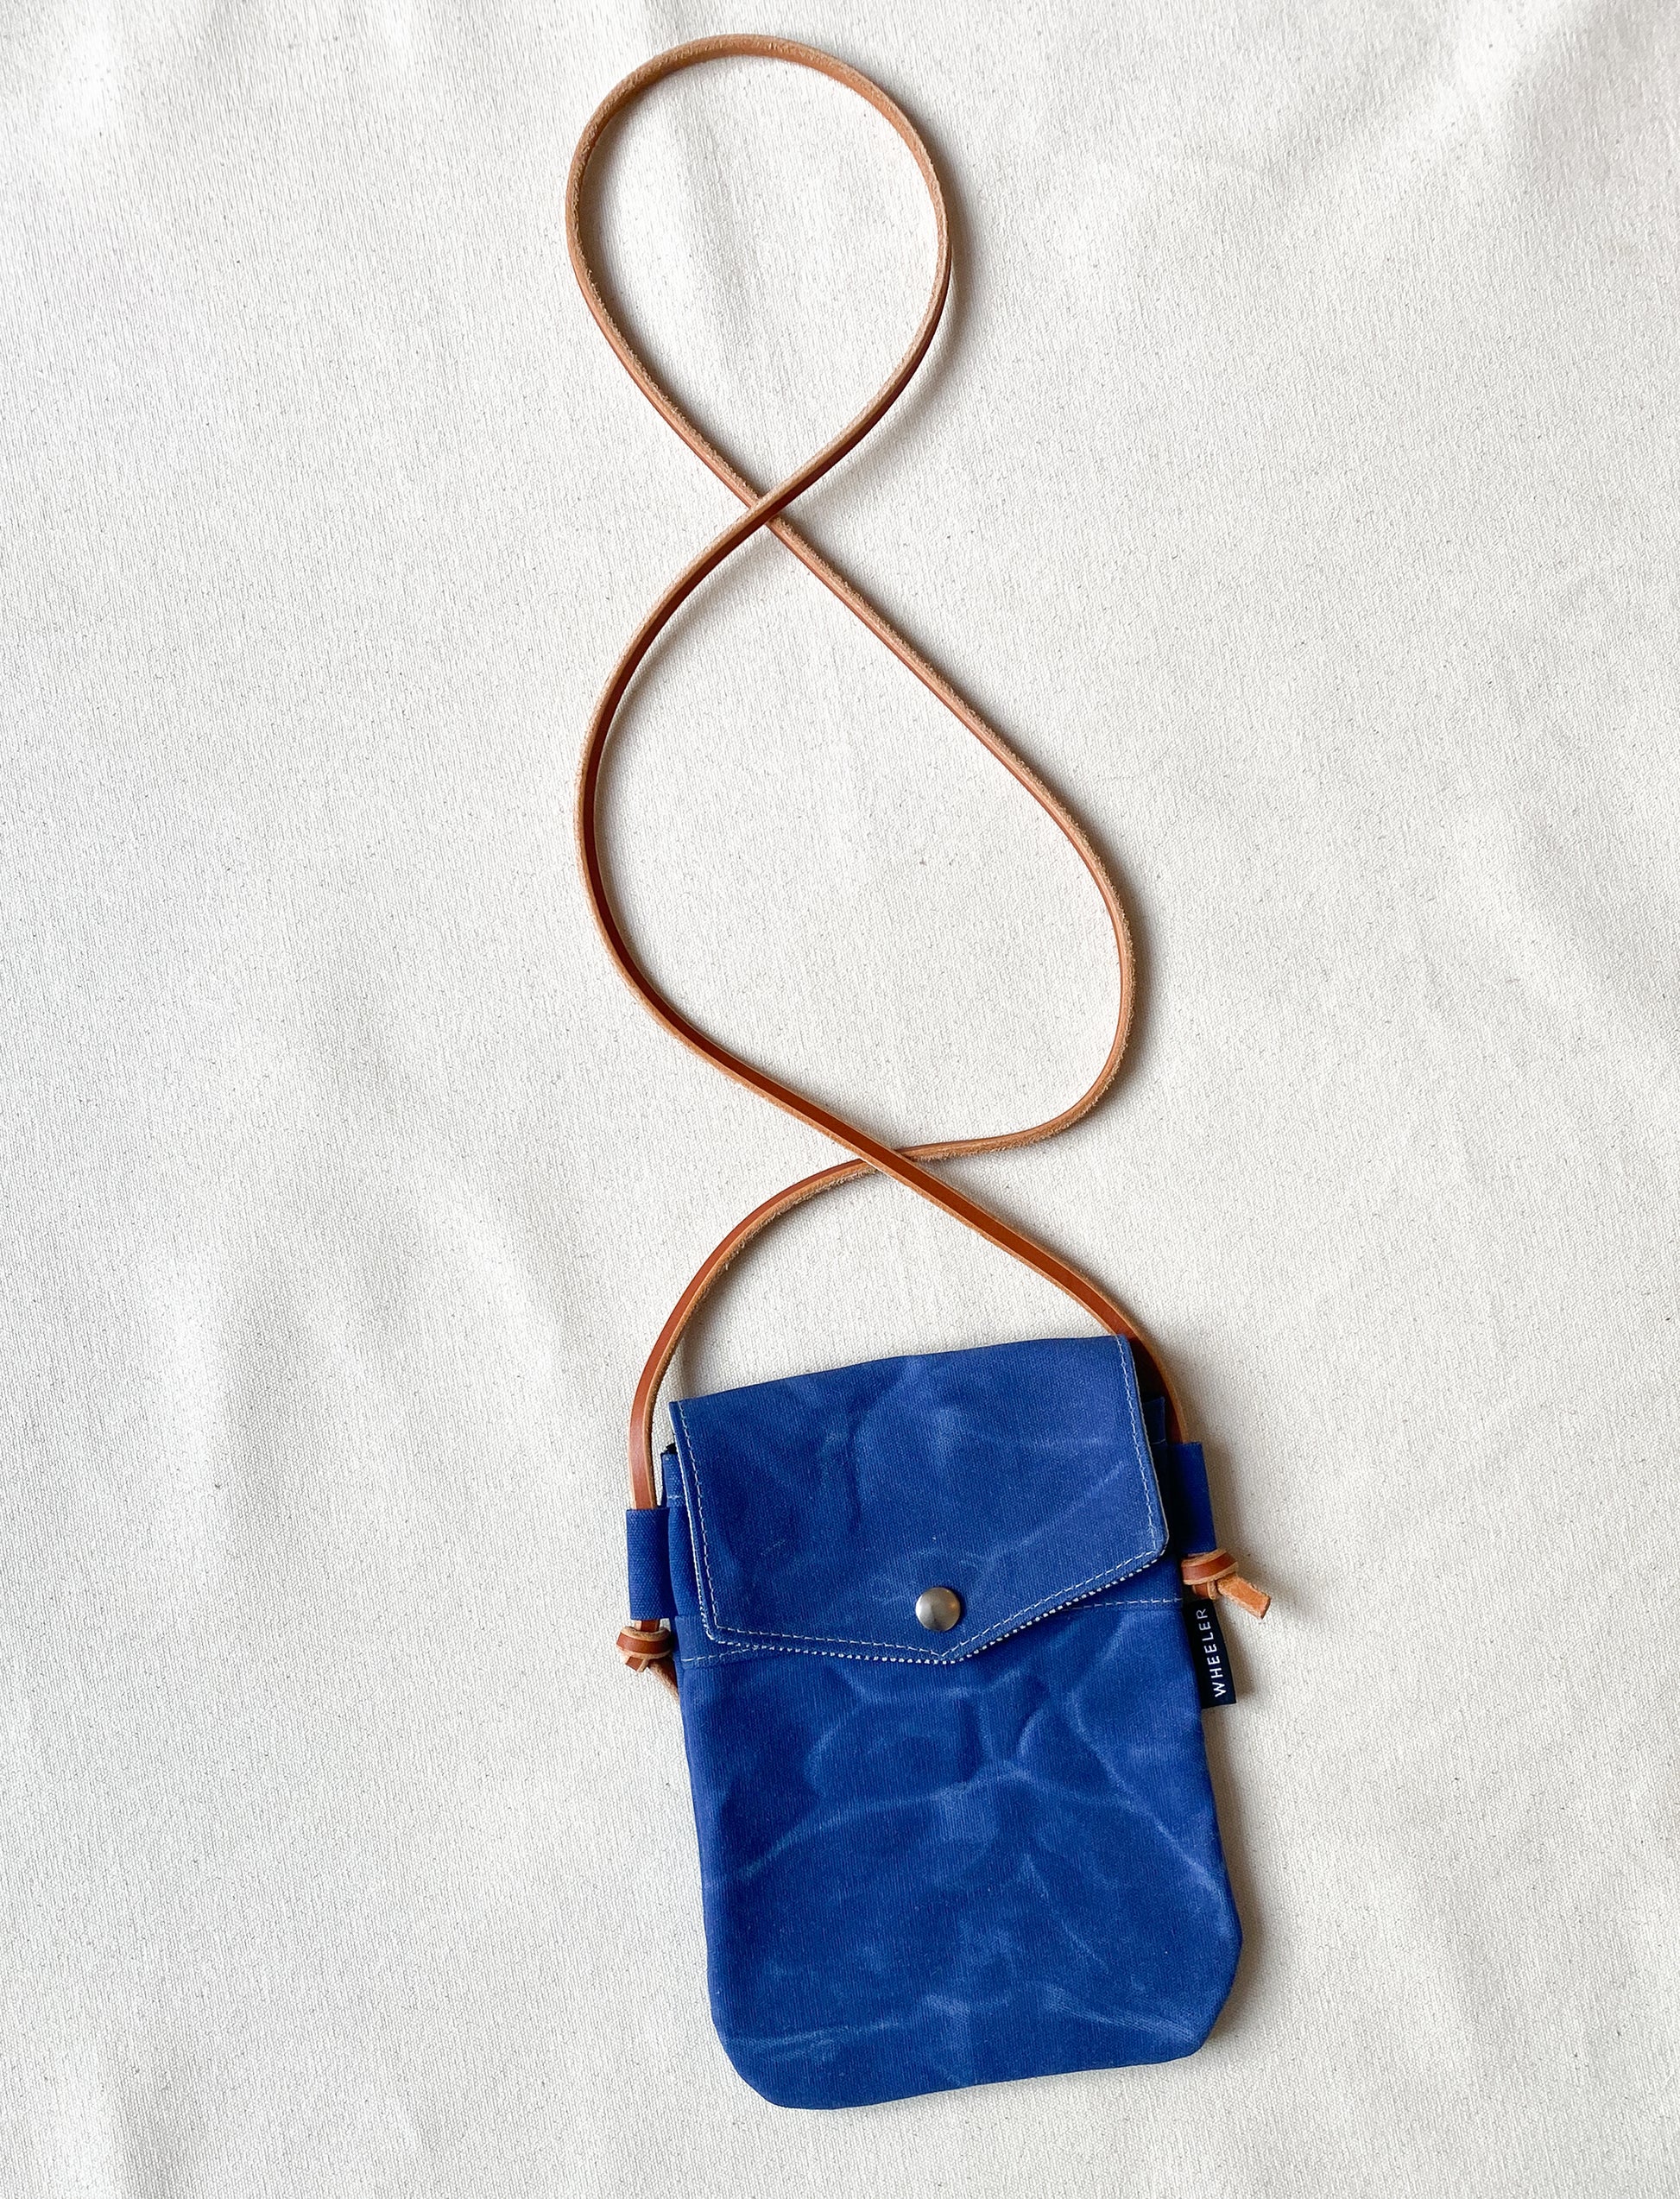 The Simple Crossbody Bag